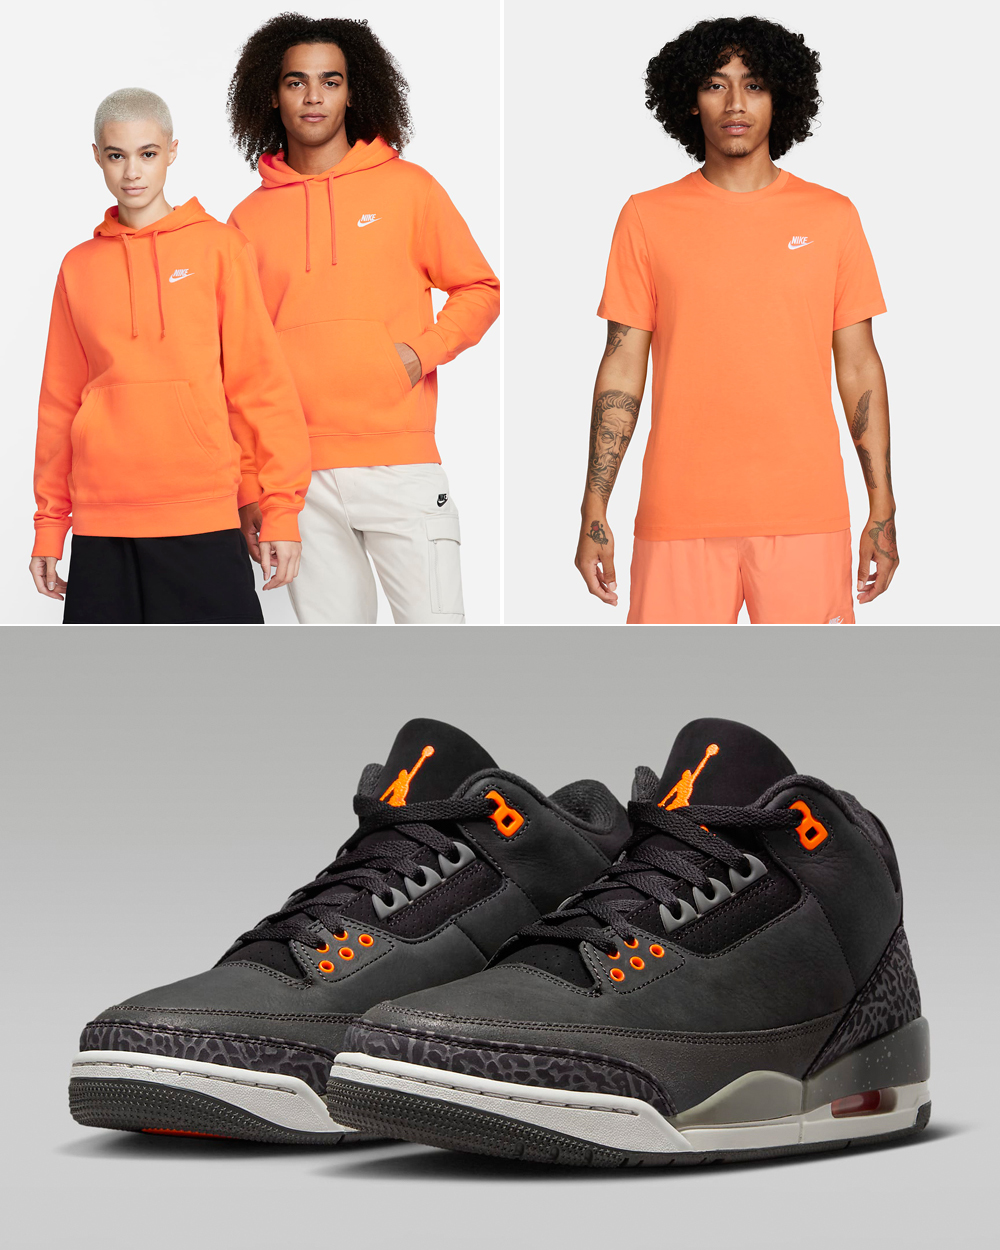 Air-Jordan-3-Fear-Nike-Clothing-Match